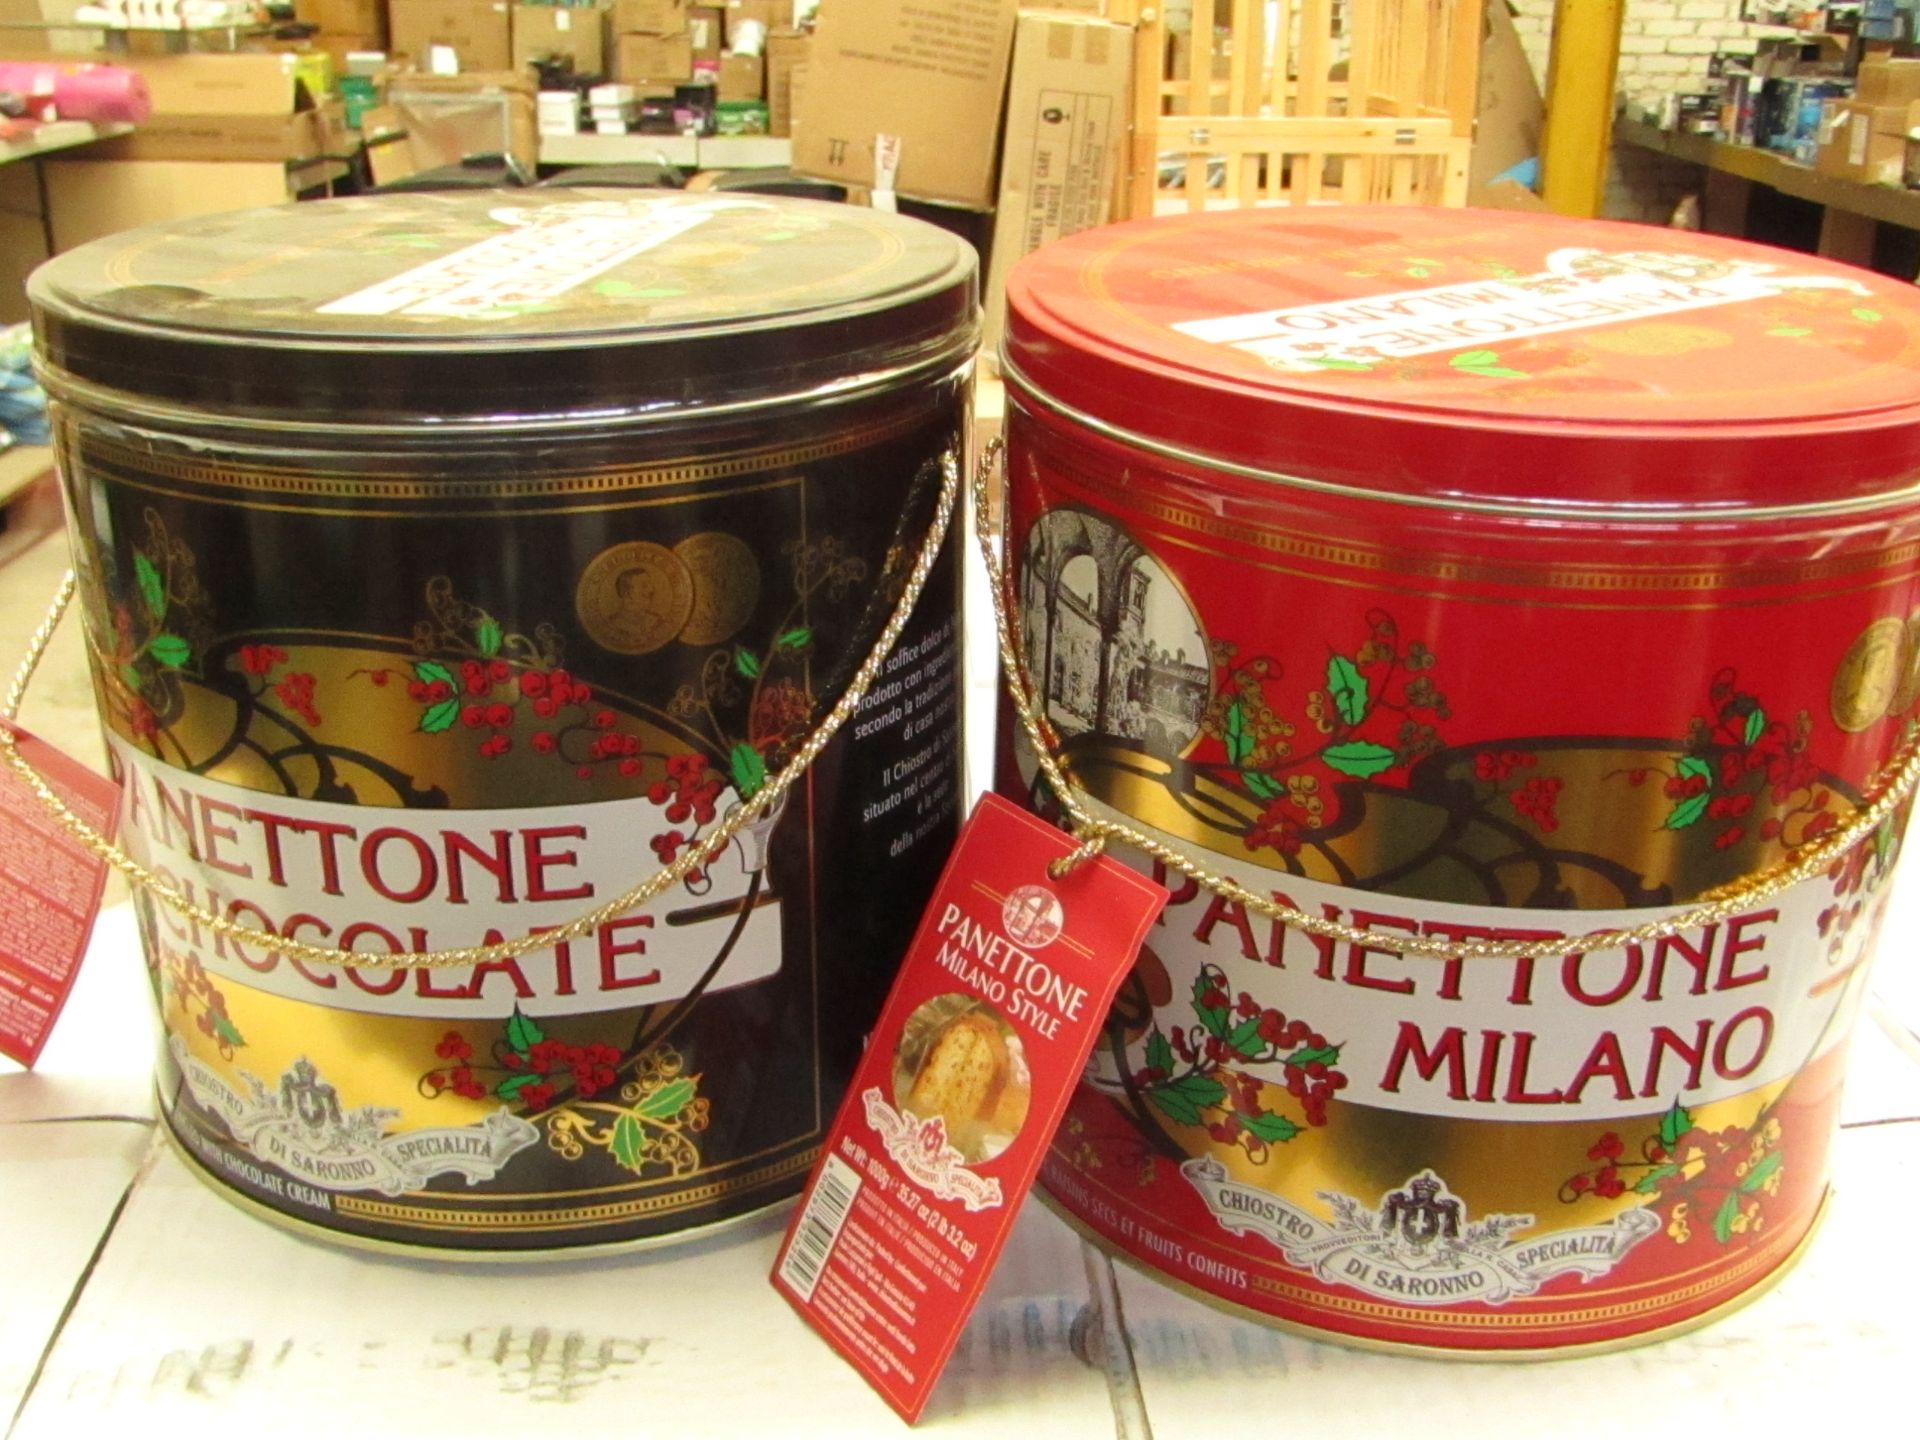 2 Items being 1 x Pannetone chocolate 750g & 1 x Pannetone Milan 1kg.Both in tins.BB 22/7/19